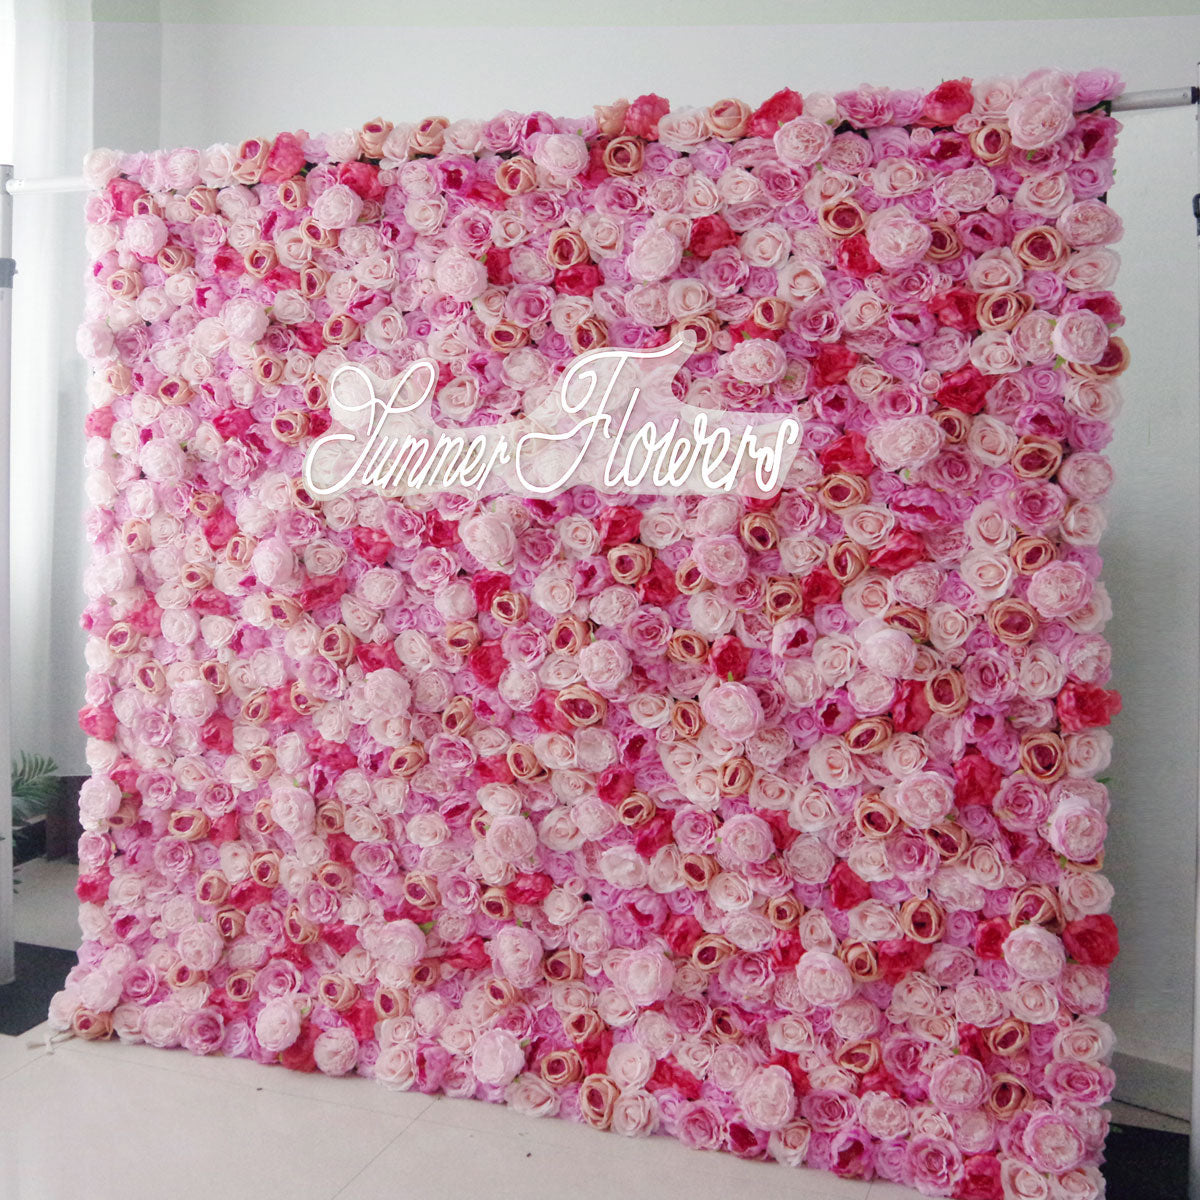 Summer Flower:CB-151 8ft*8ft Cloth Back Artificial Flower Wall Backdrop